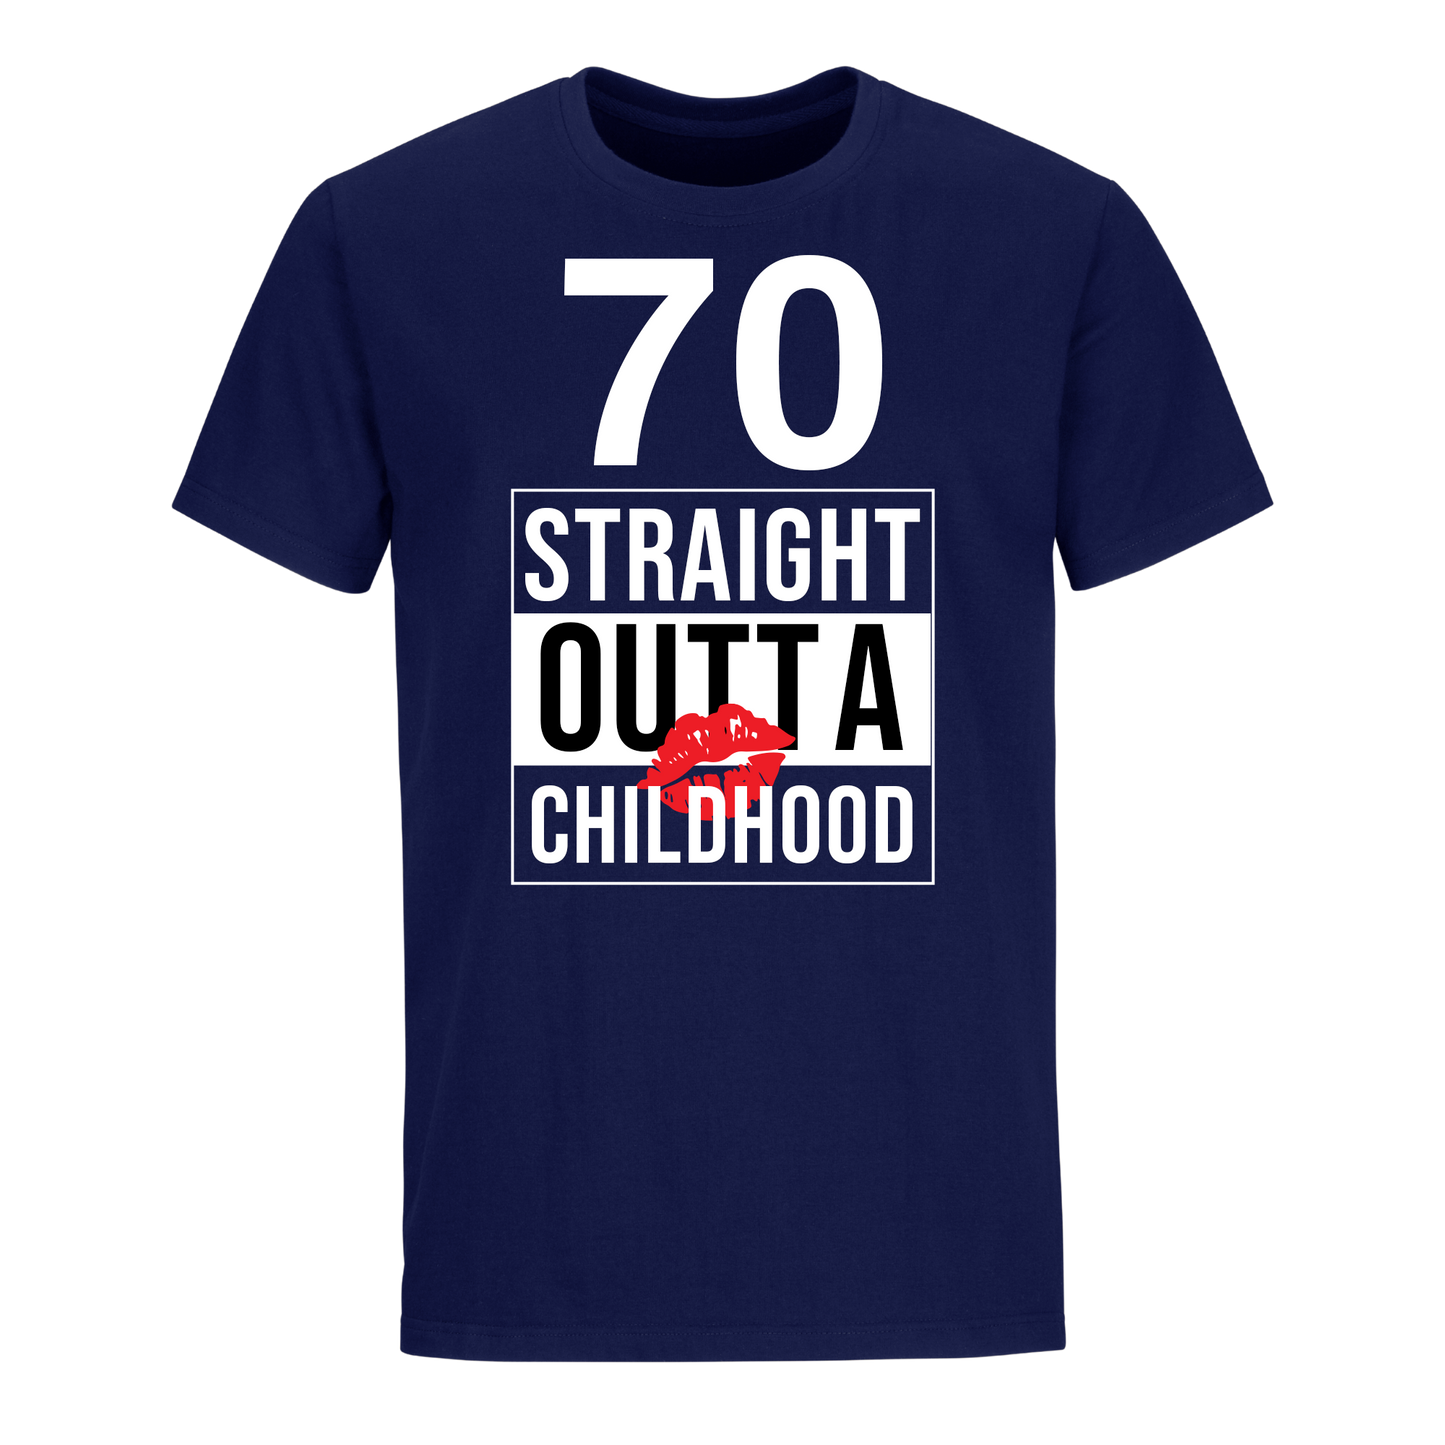 70 STRAIGHT OUTTA CHILDHOOD UNISEX SHIRT